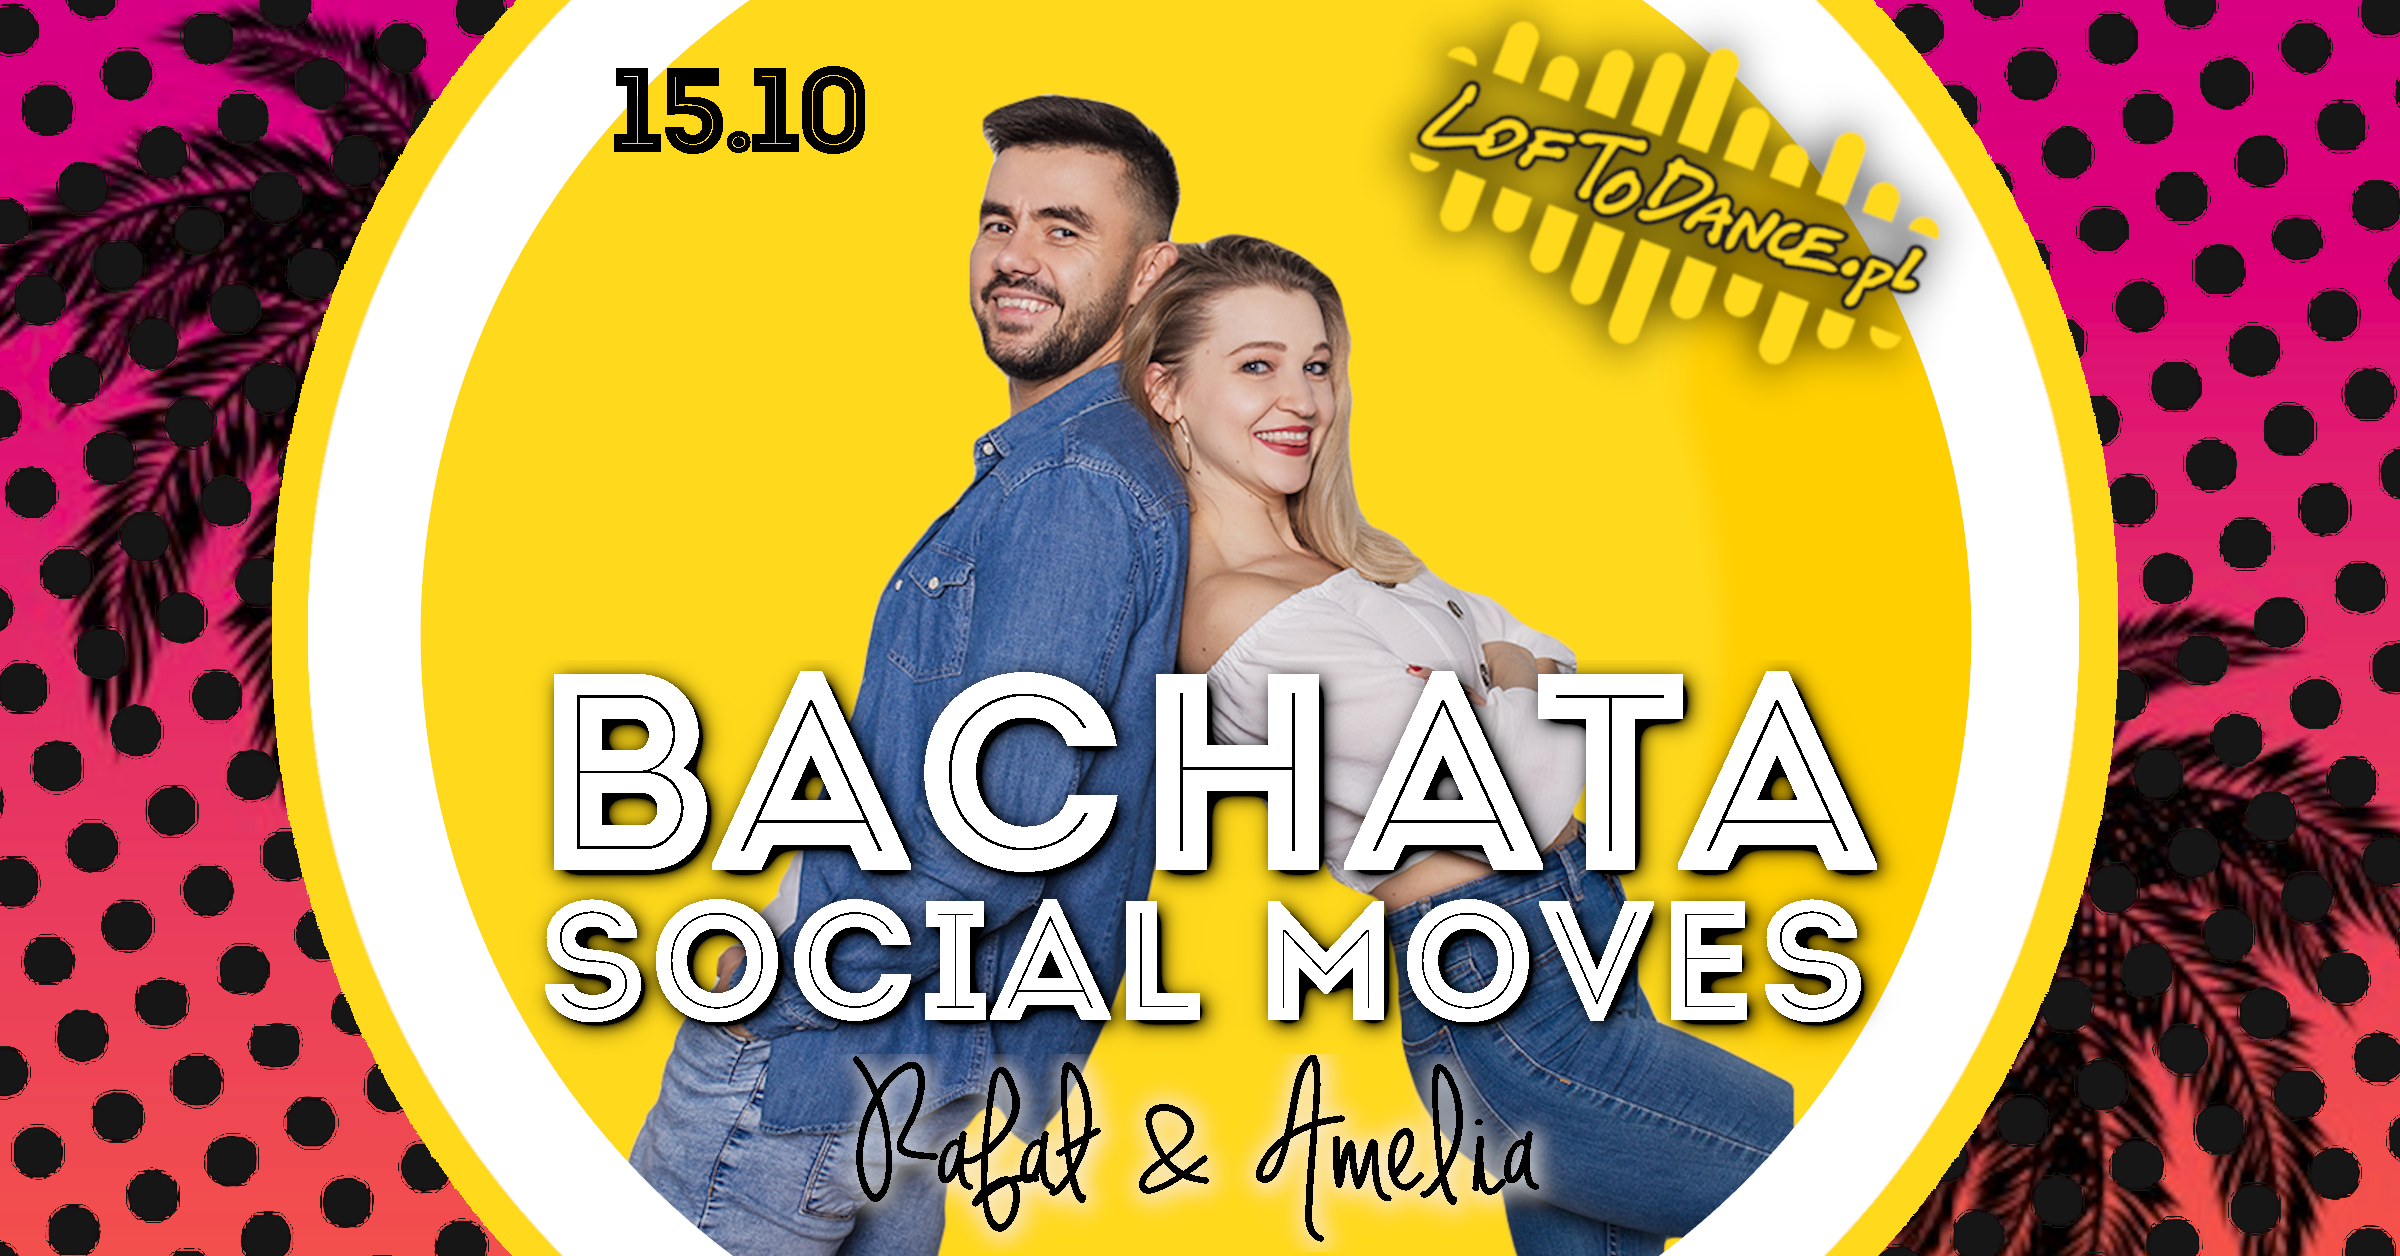 Bachata social moves by Rafał & Amelia